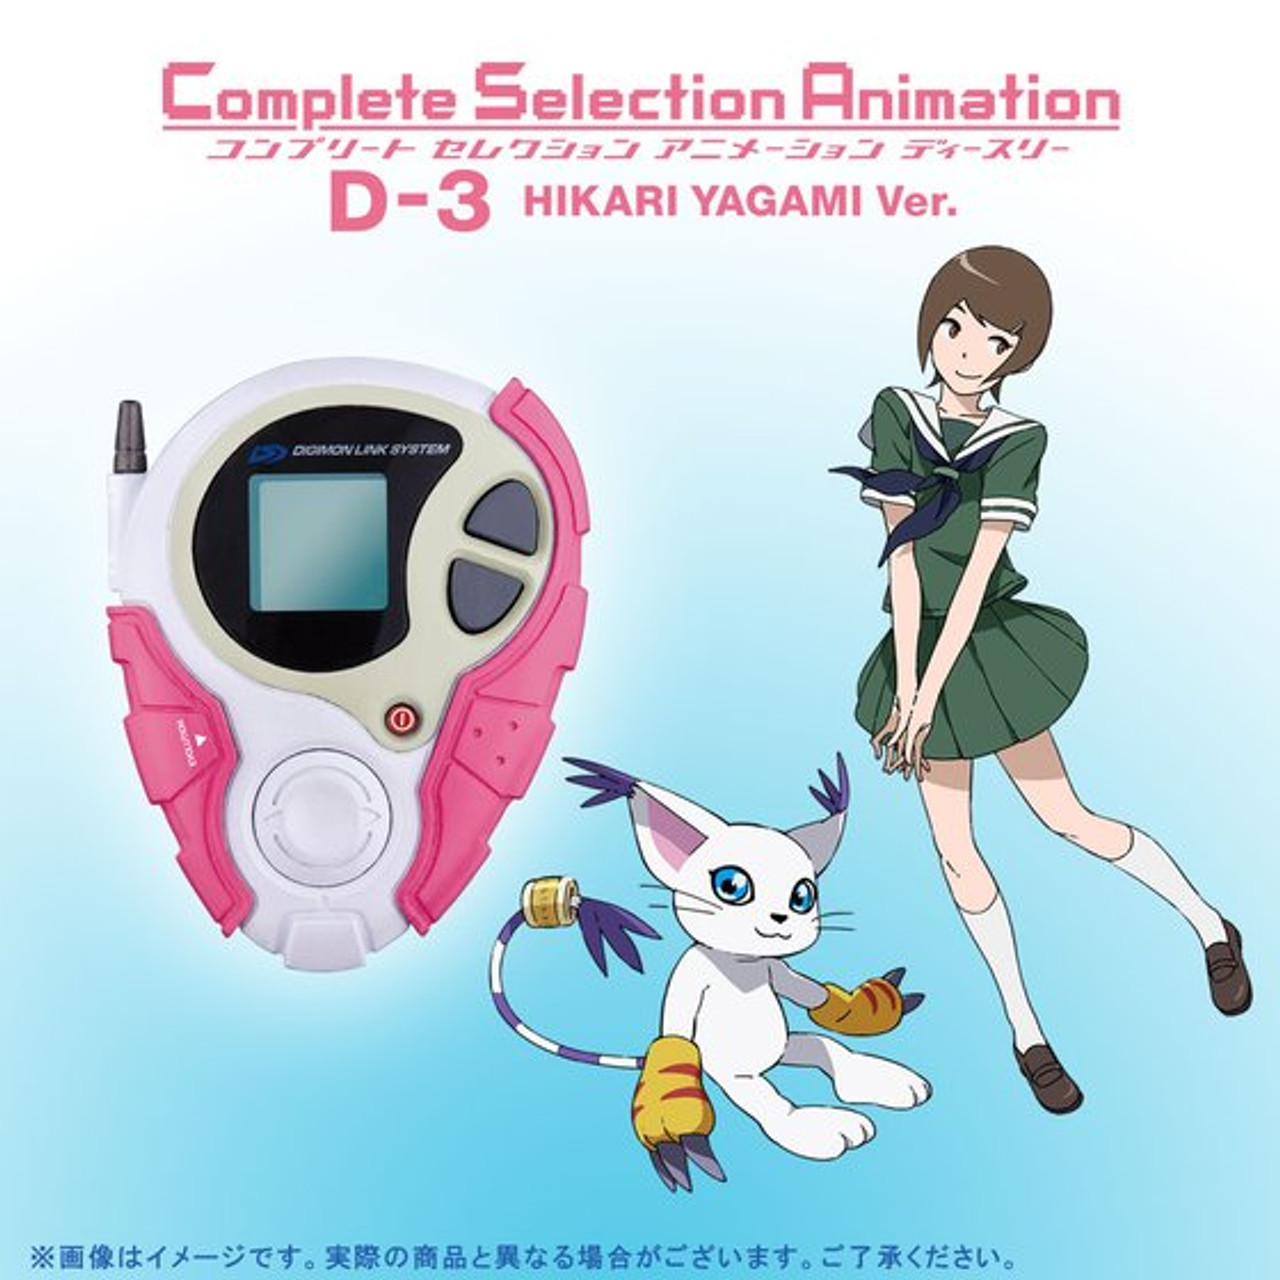 Digimon Adventure: ganha data para voltar à televisão japonesa - NerdBunker